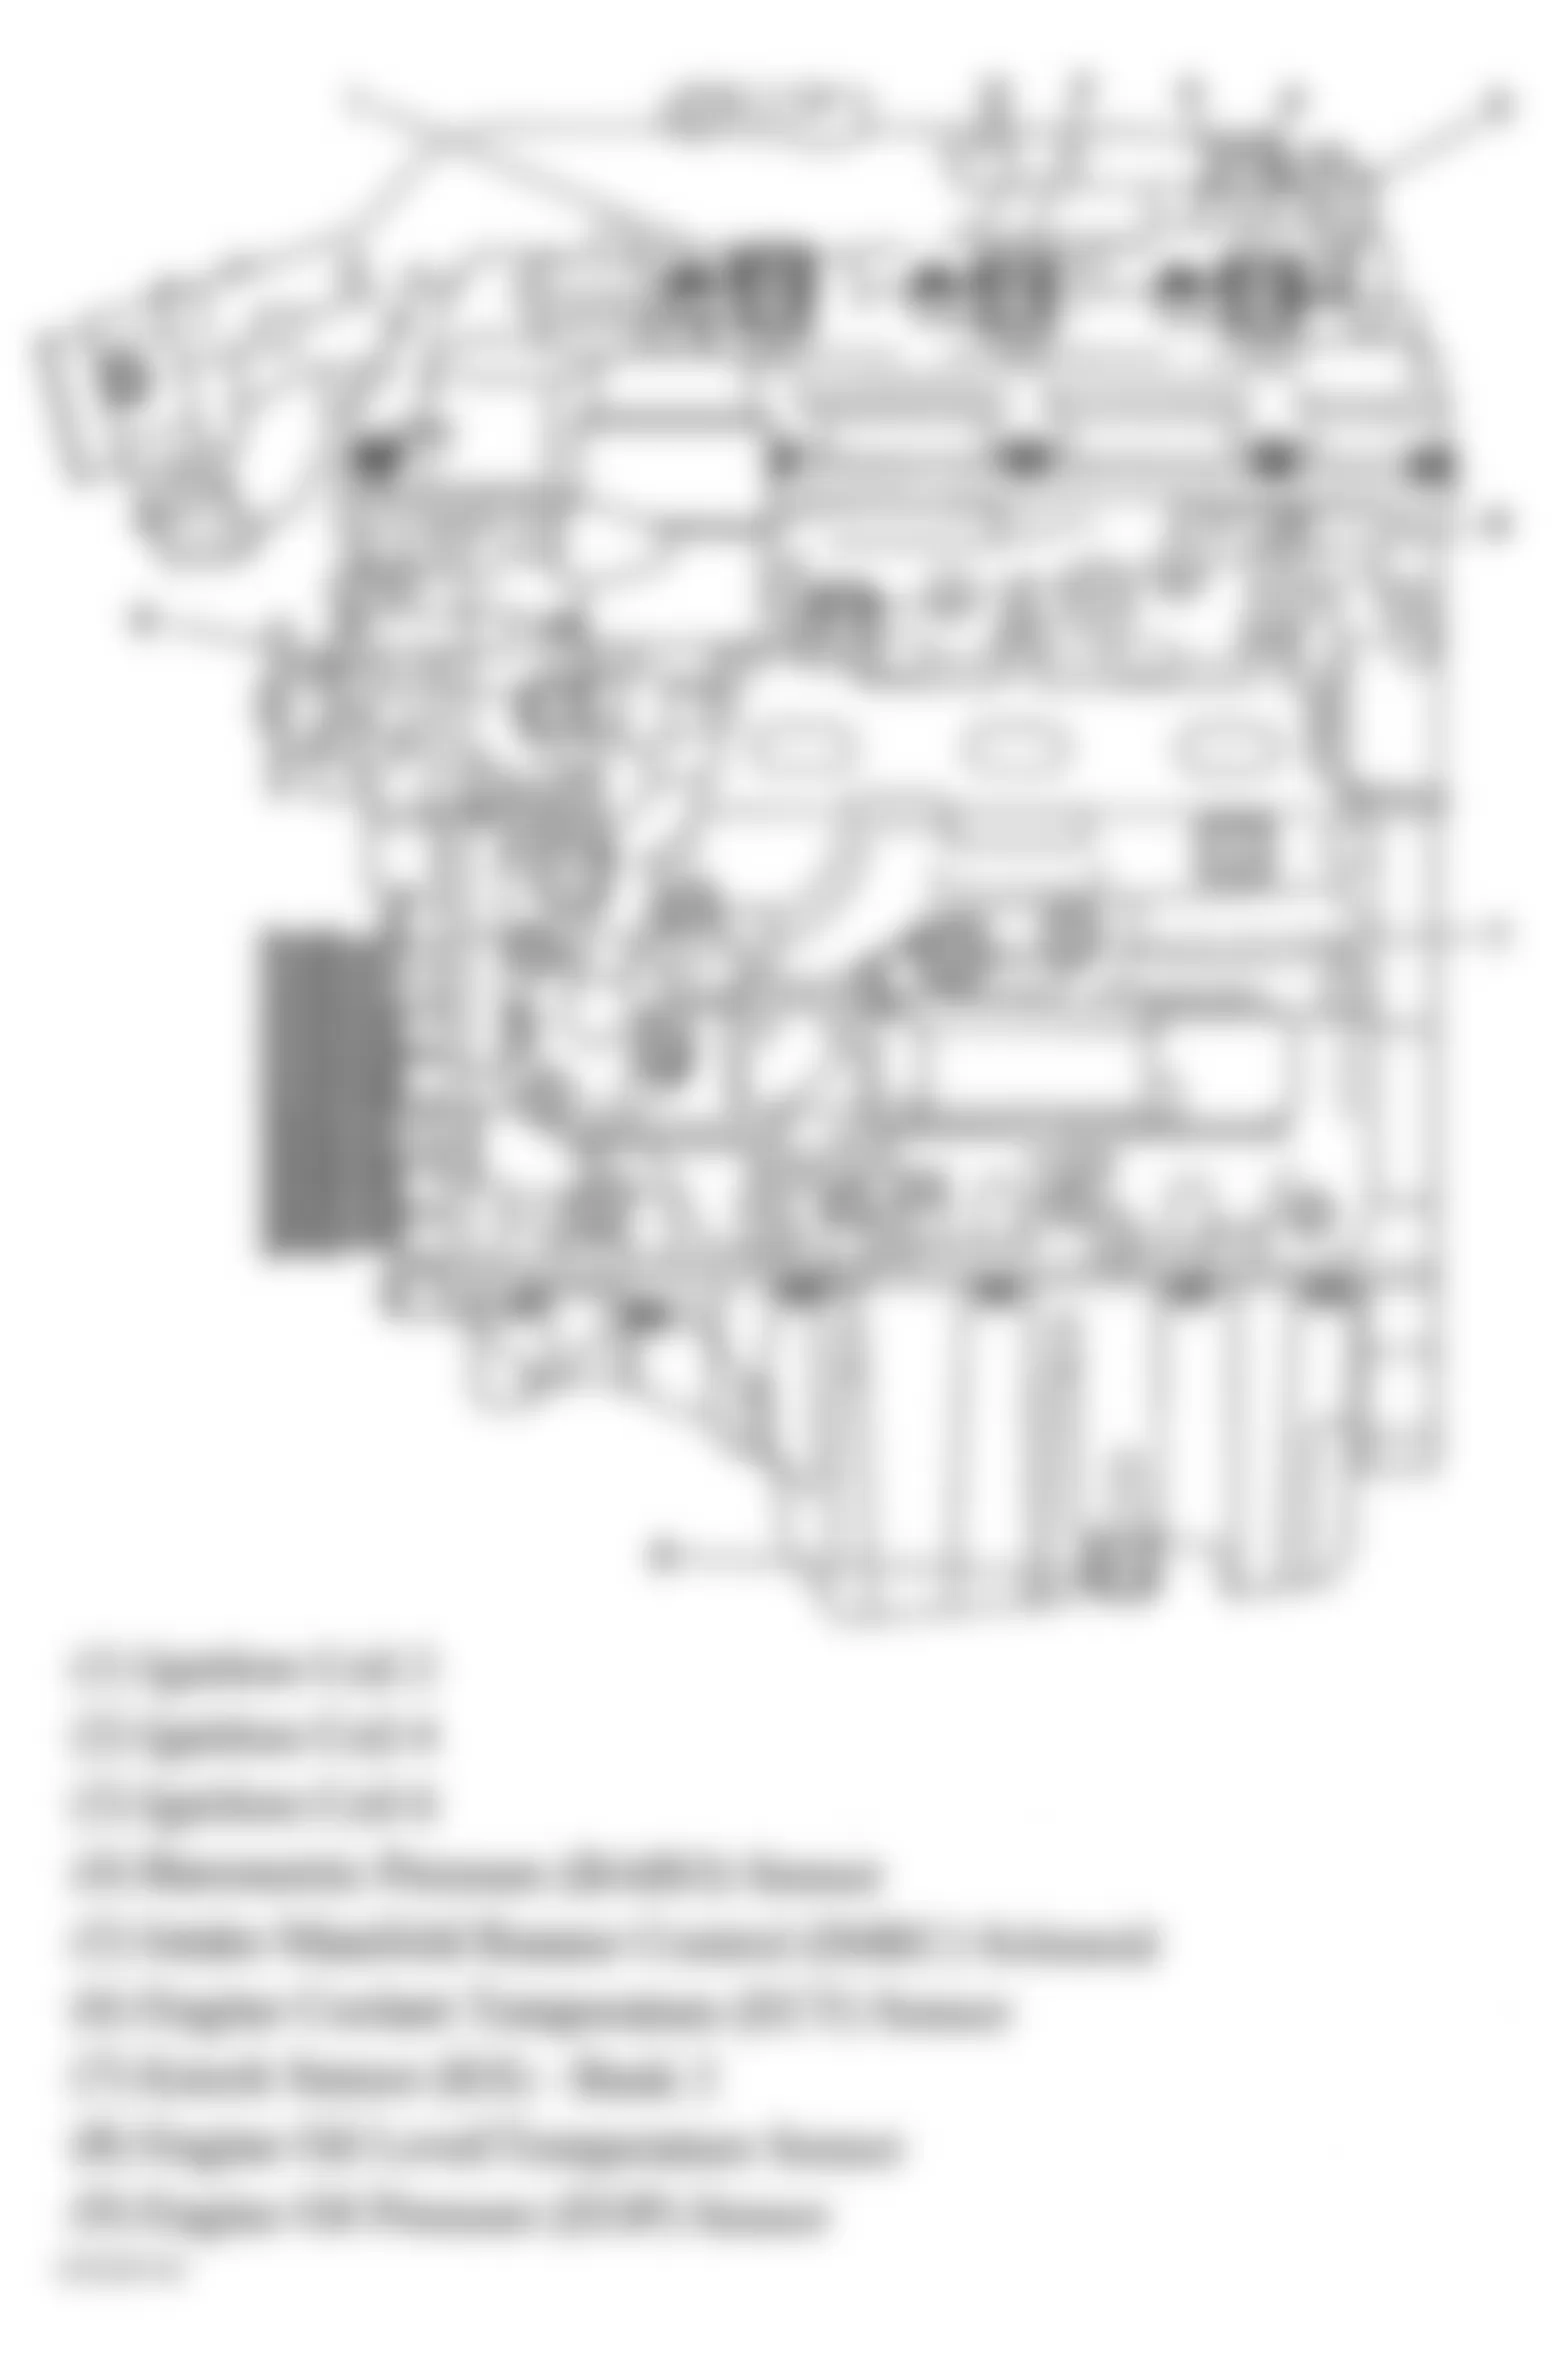 Buick Allure CX 2005 - Component Locations -  Engine Control Components (3.6L)